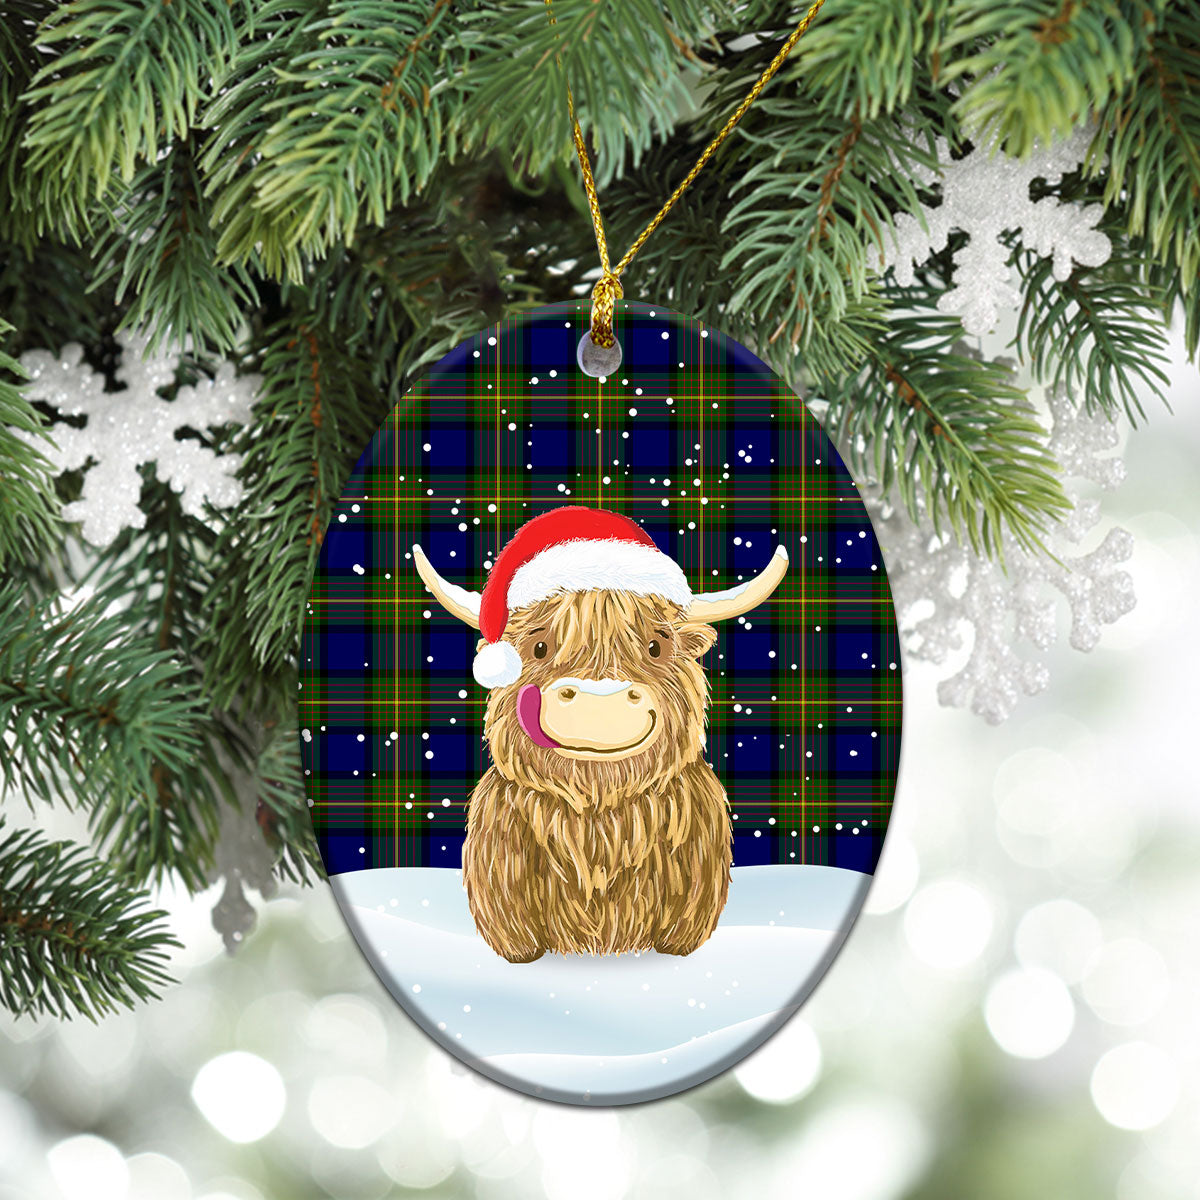 Muir Tartan Christmas Ceramic Ornament - Highland Cows Style